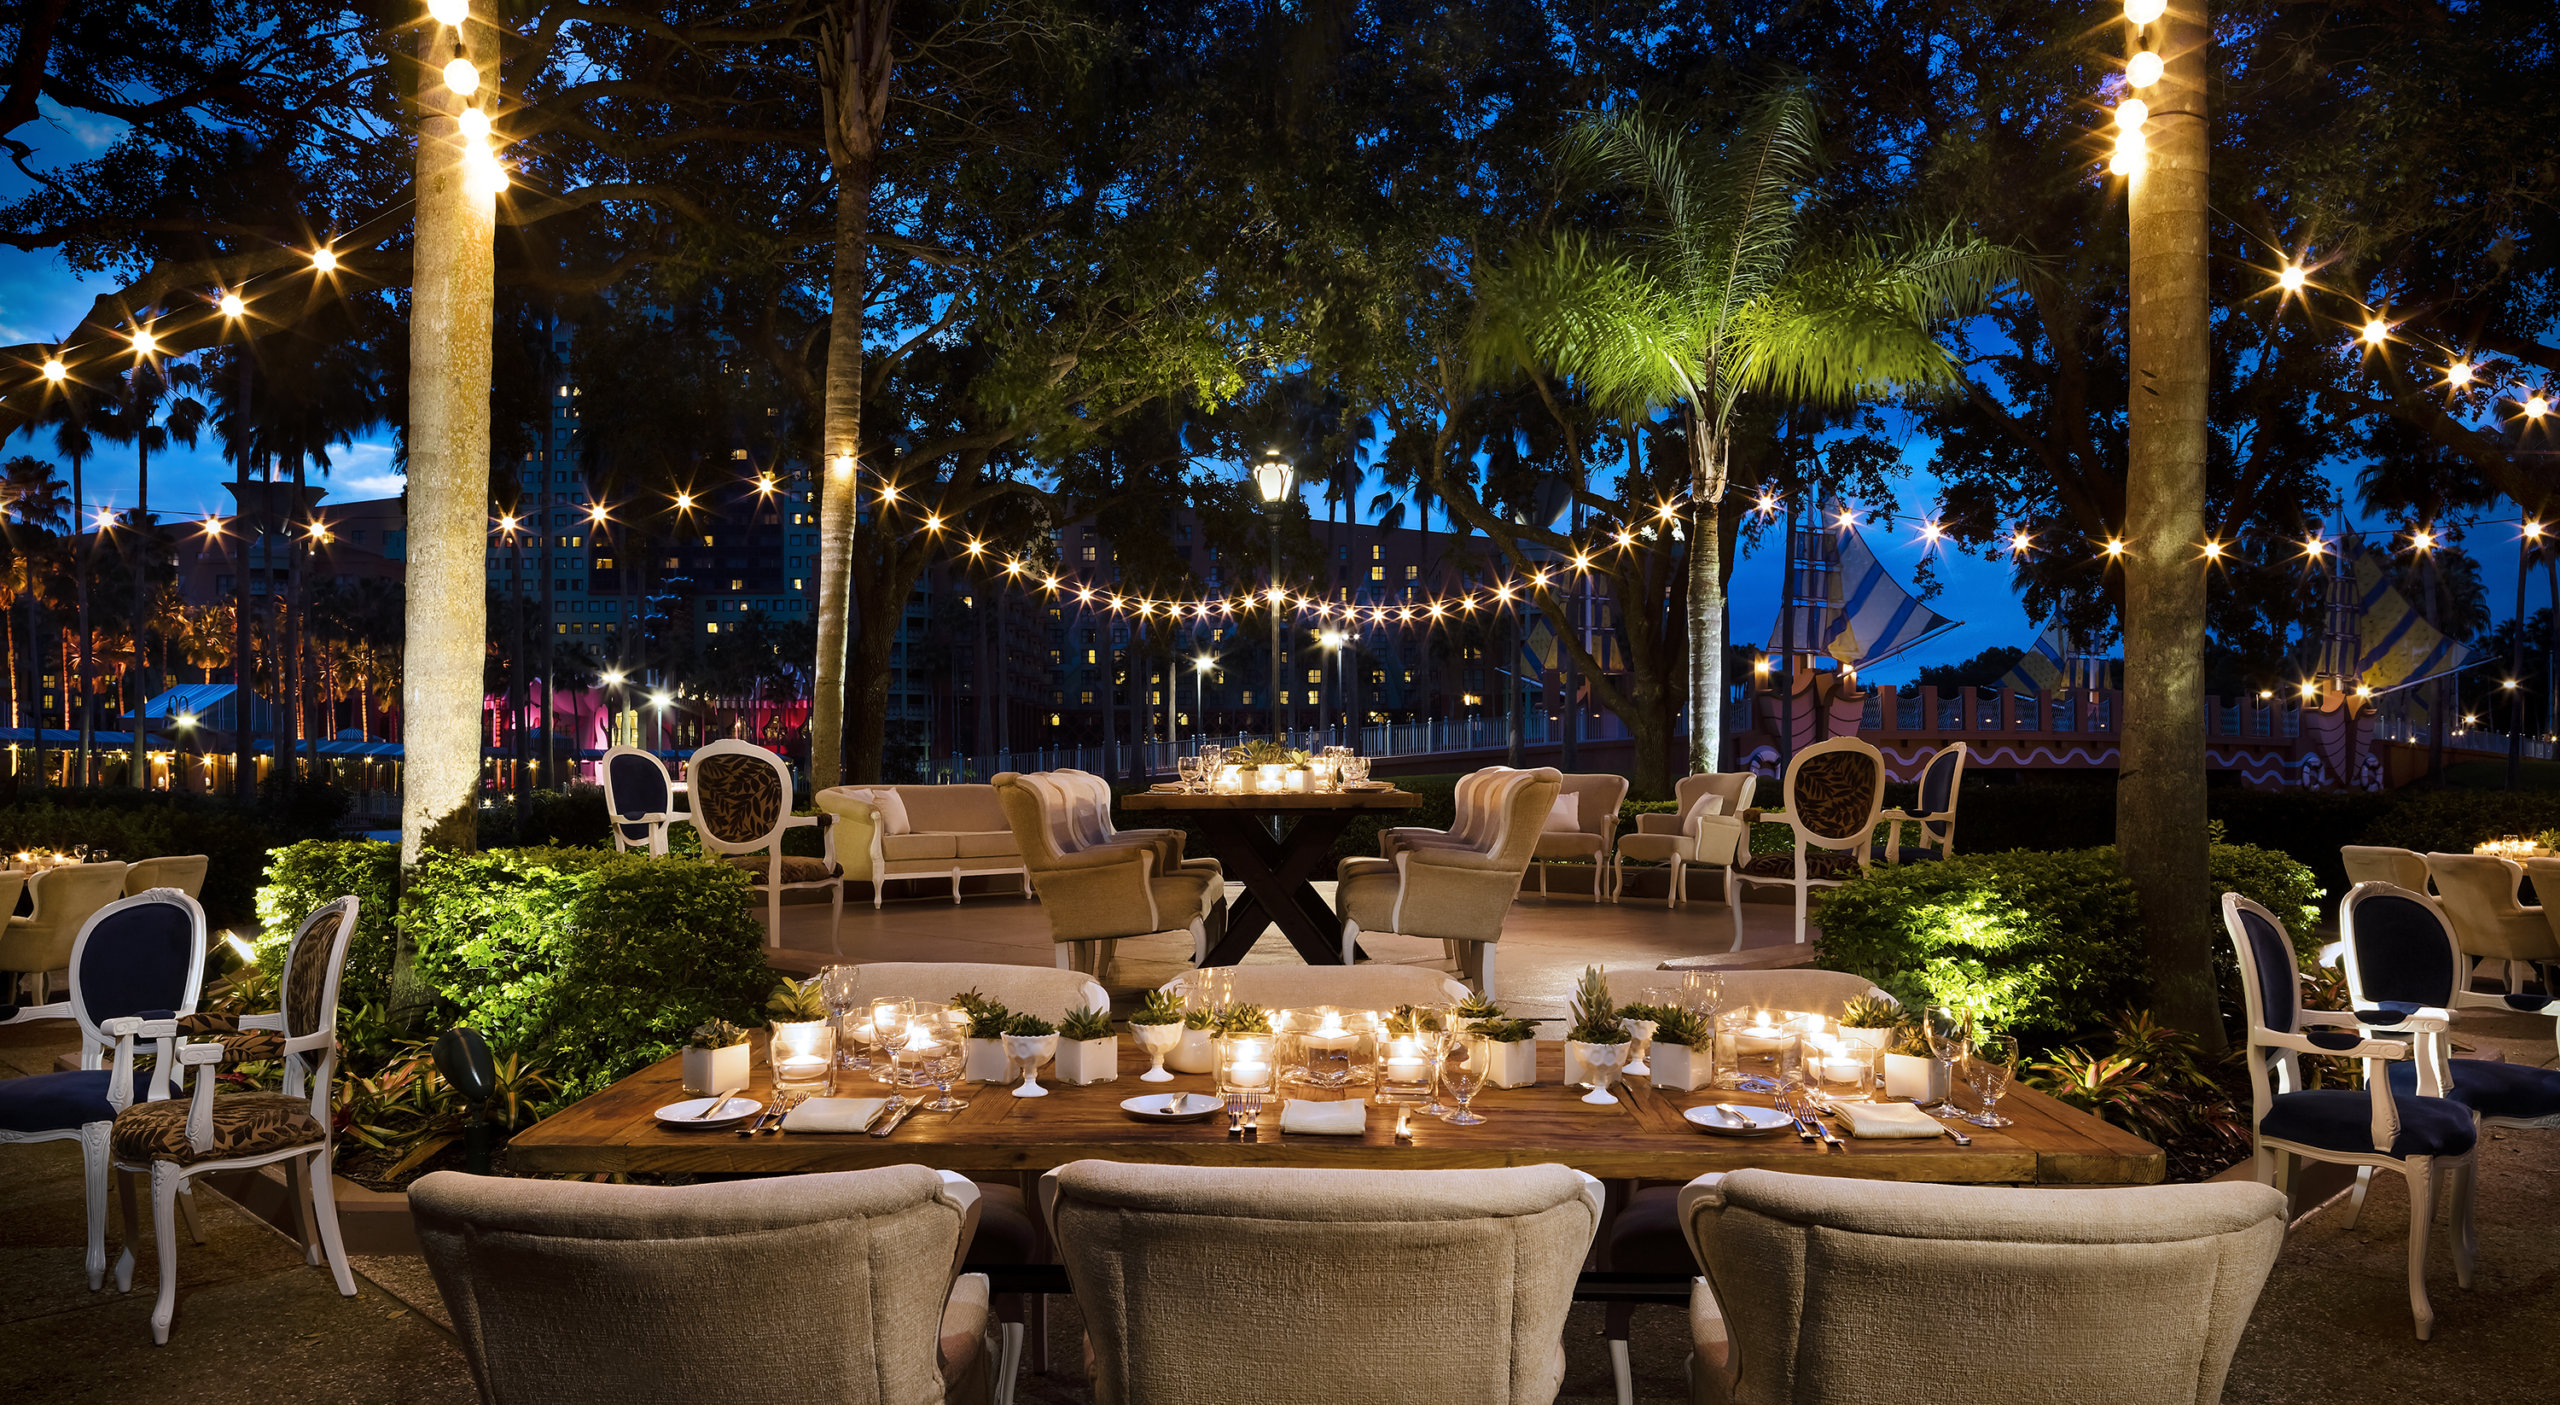 Dinner Banquet Set-Up at Crescent Terrace at the Walt Disney World Swan Resort